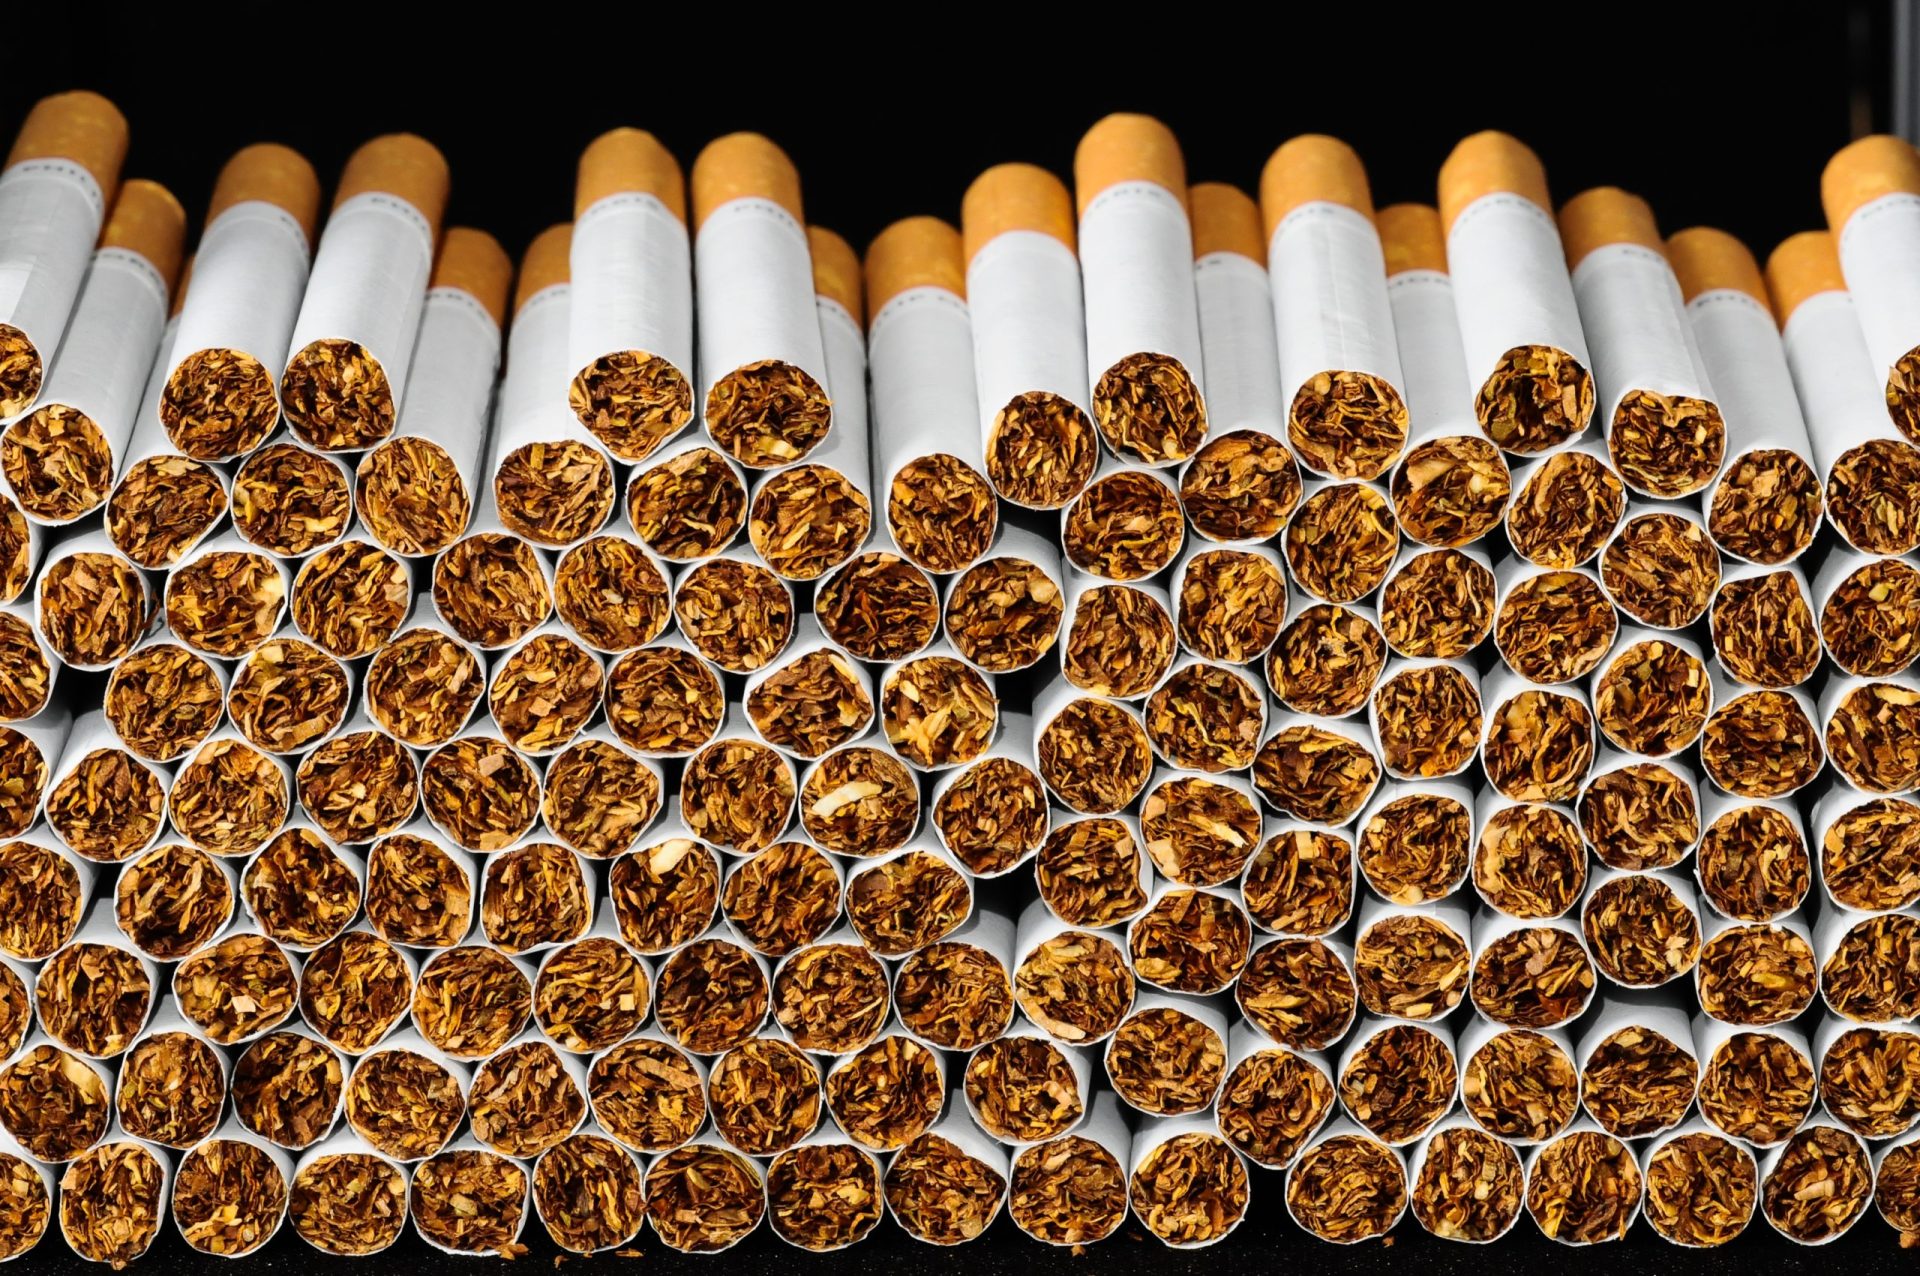 PJ apreendeu 18 milhões de cigarros de contrabando